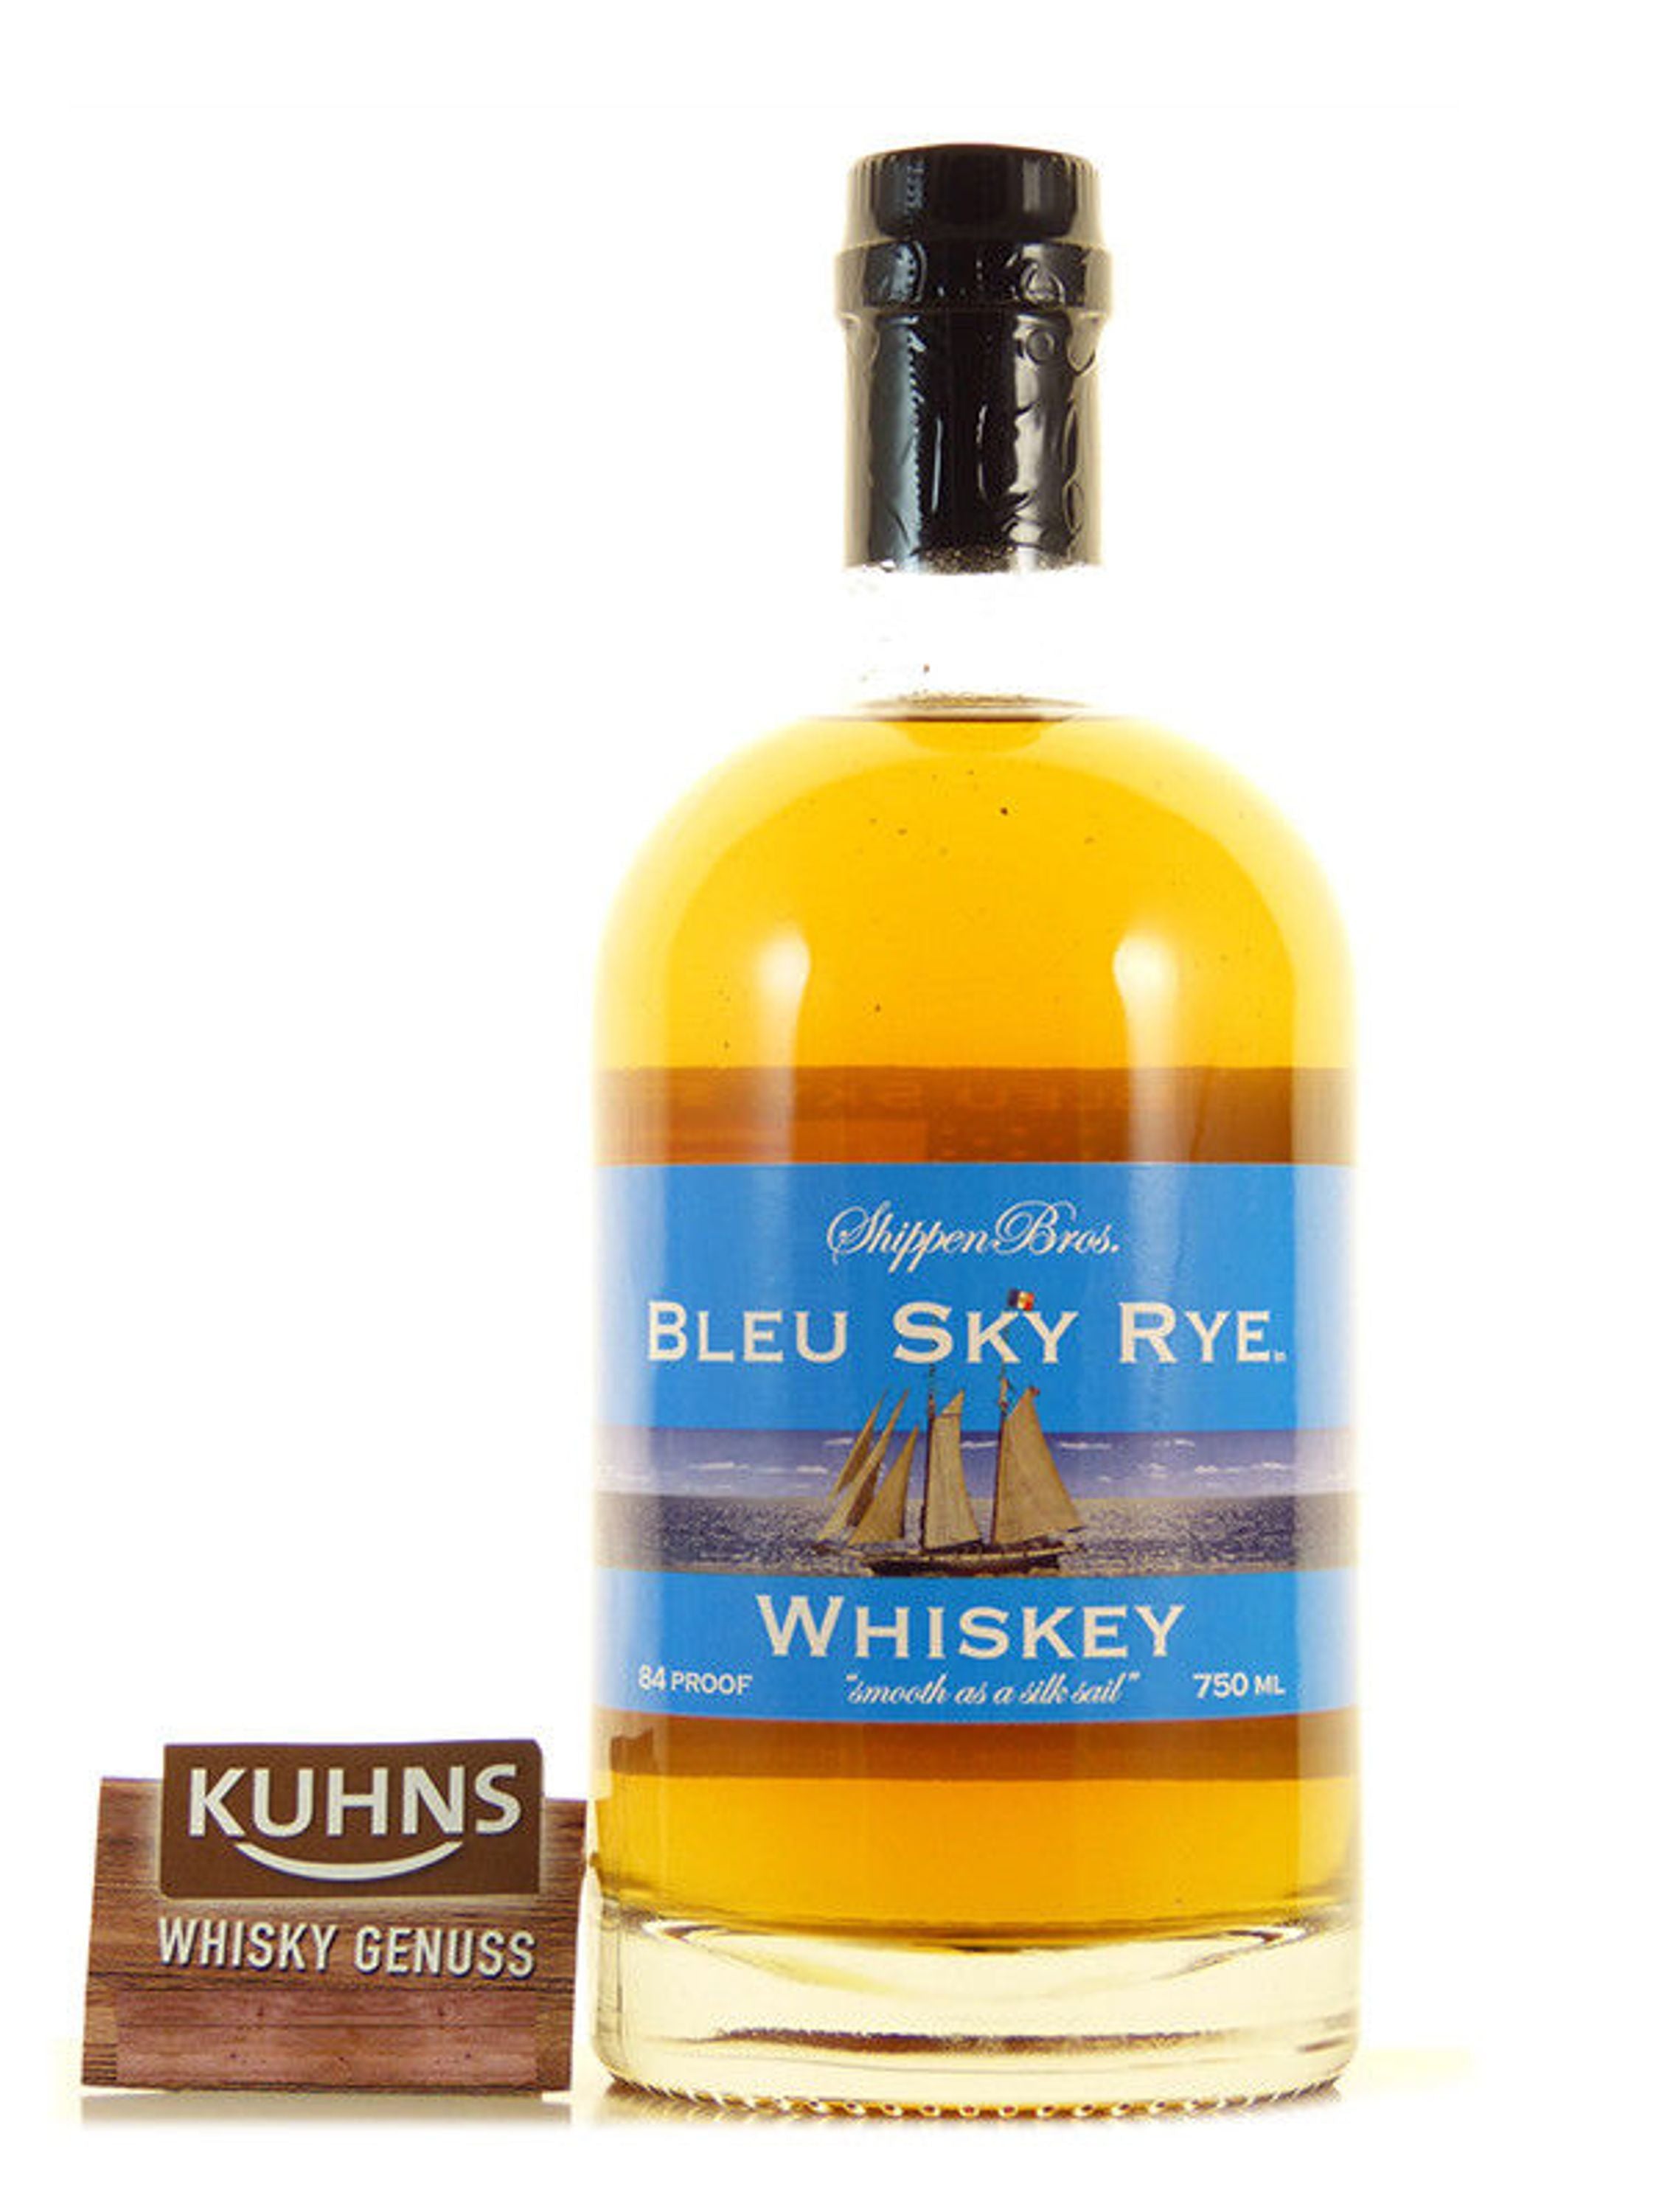 Bleu Sky Kentucky Rye Whiskey 0.7l, alc. 42% by volume